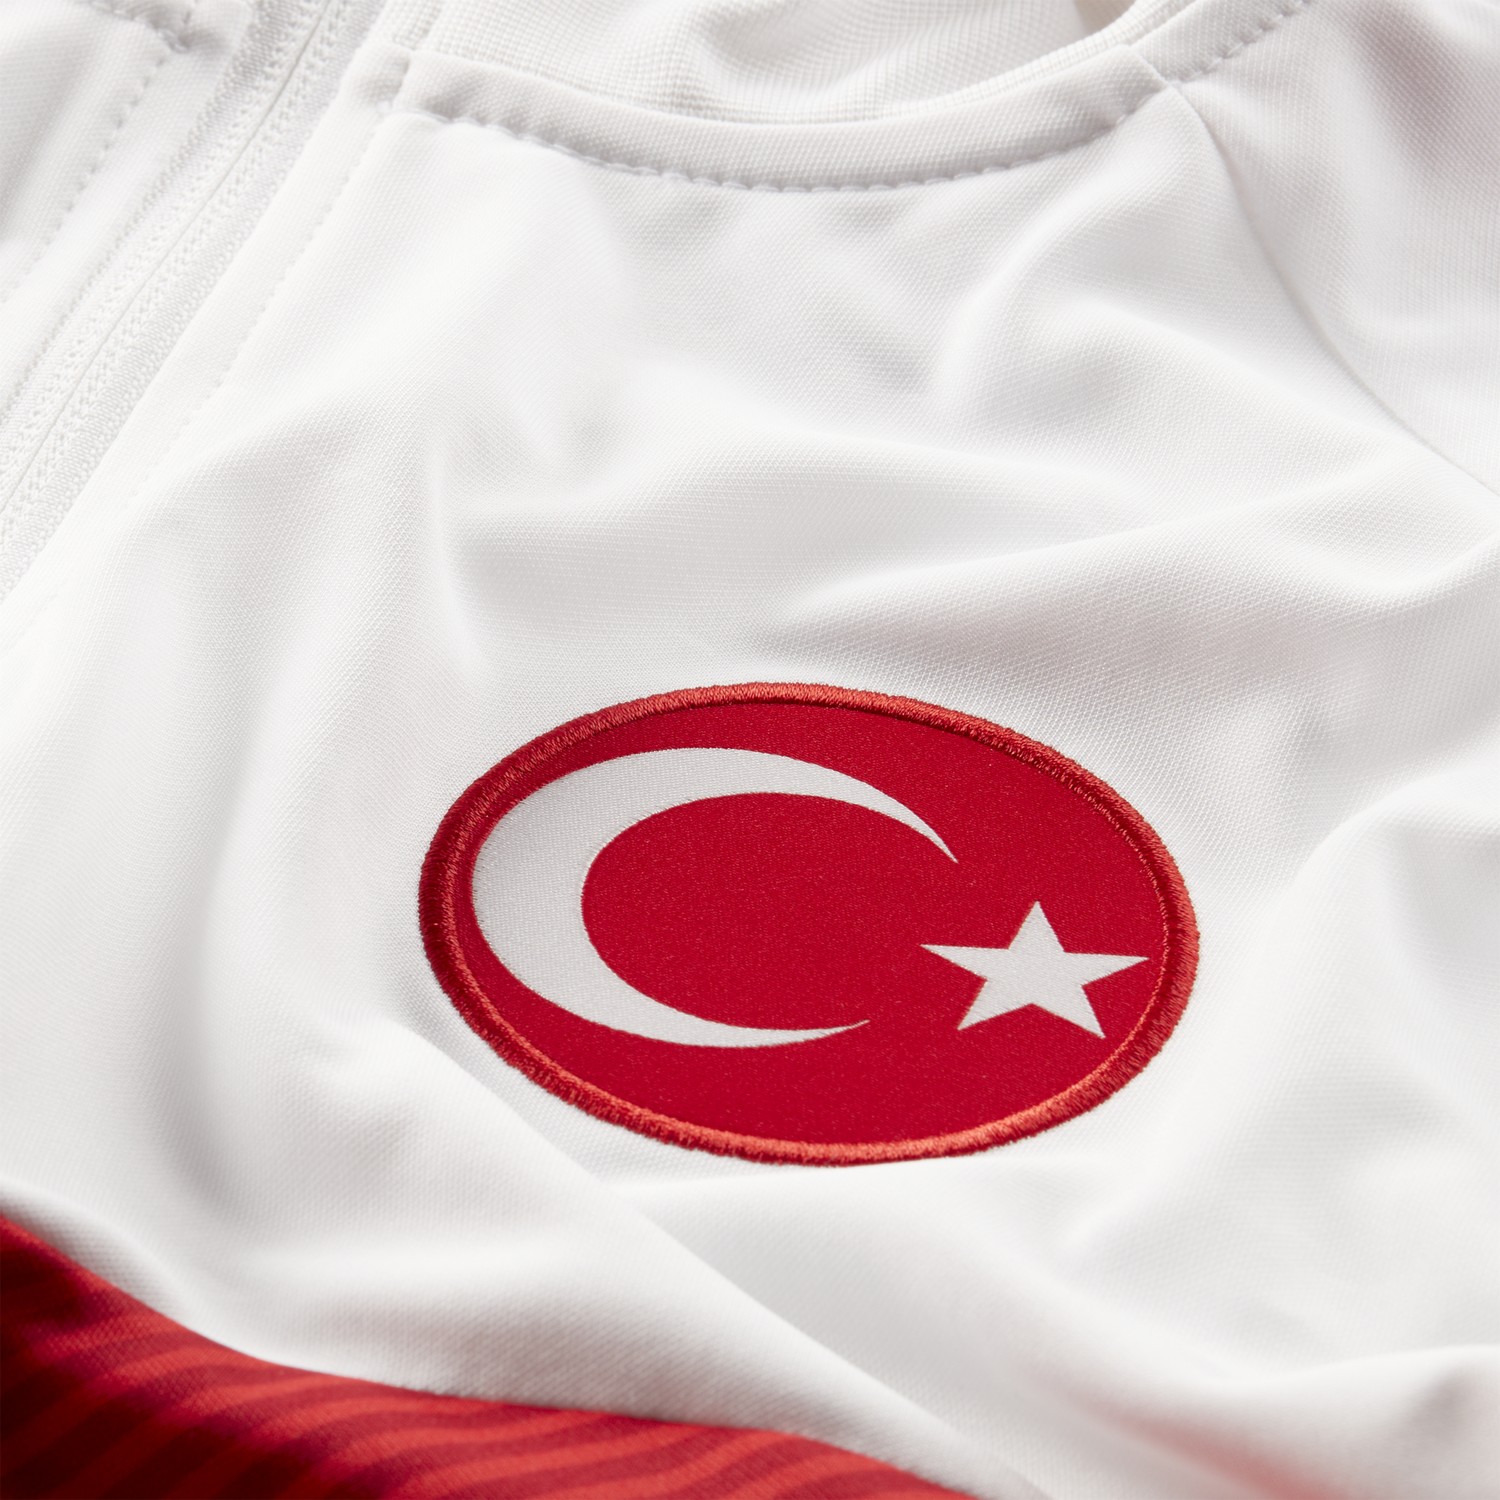 Nike Brazil Anthem Jacket 2022. Made Turkey fabrique en Turkey Nike Turquie. Найк турция сайт